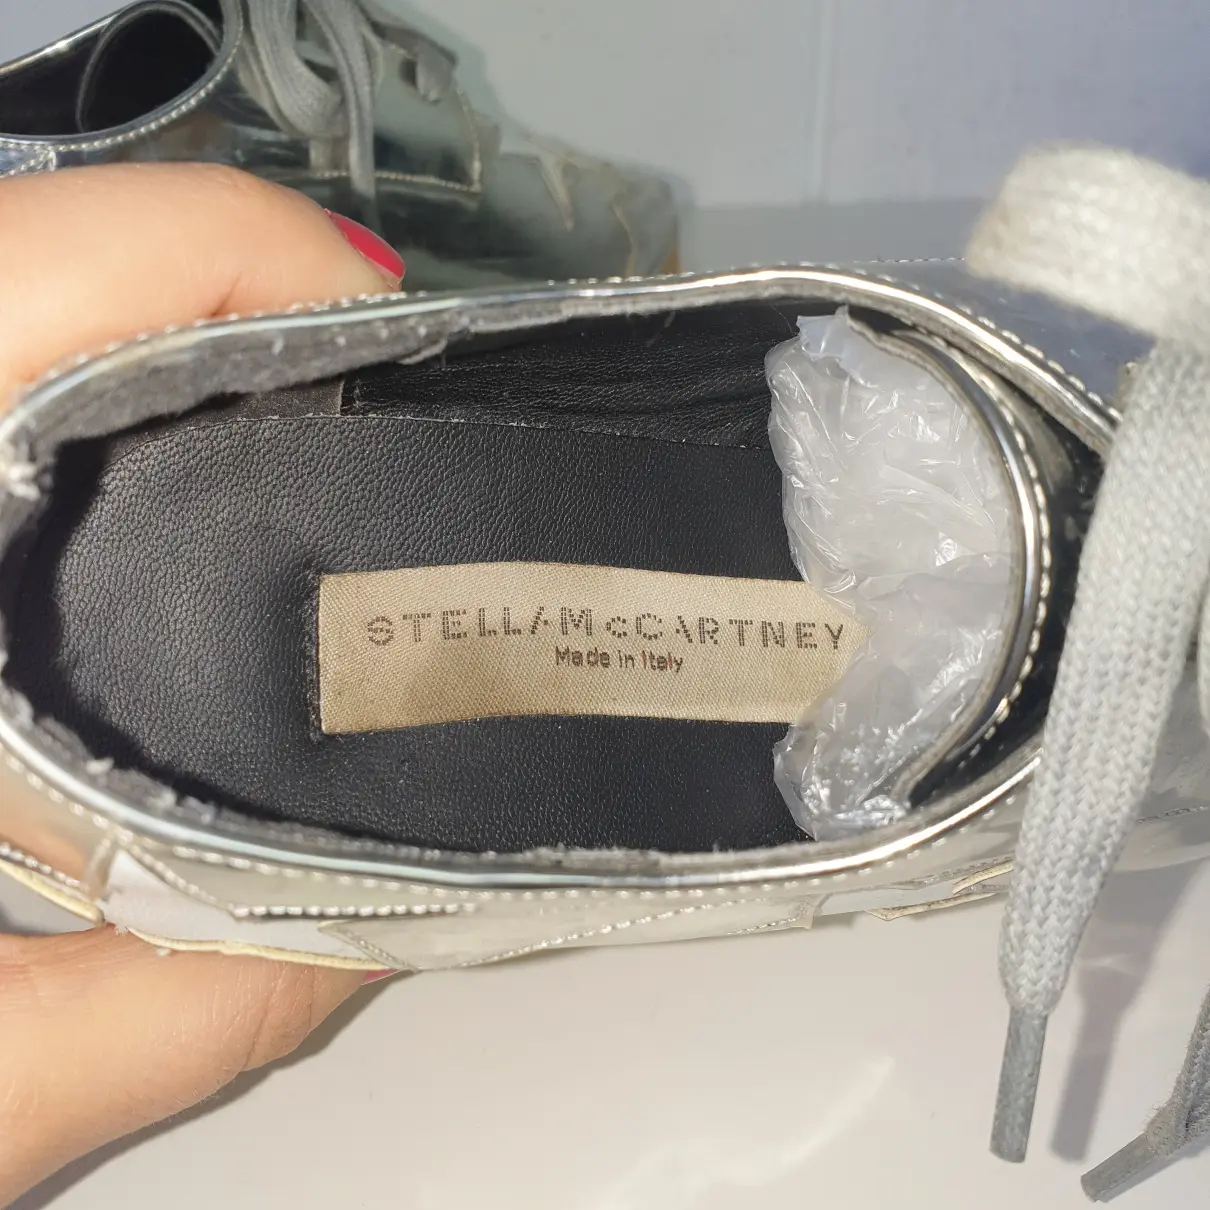 Buy Stella McCartney Elyse patent leather lace ups online